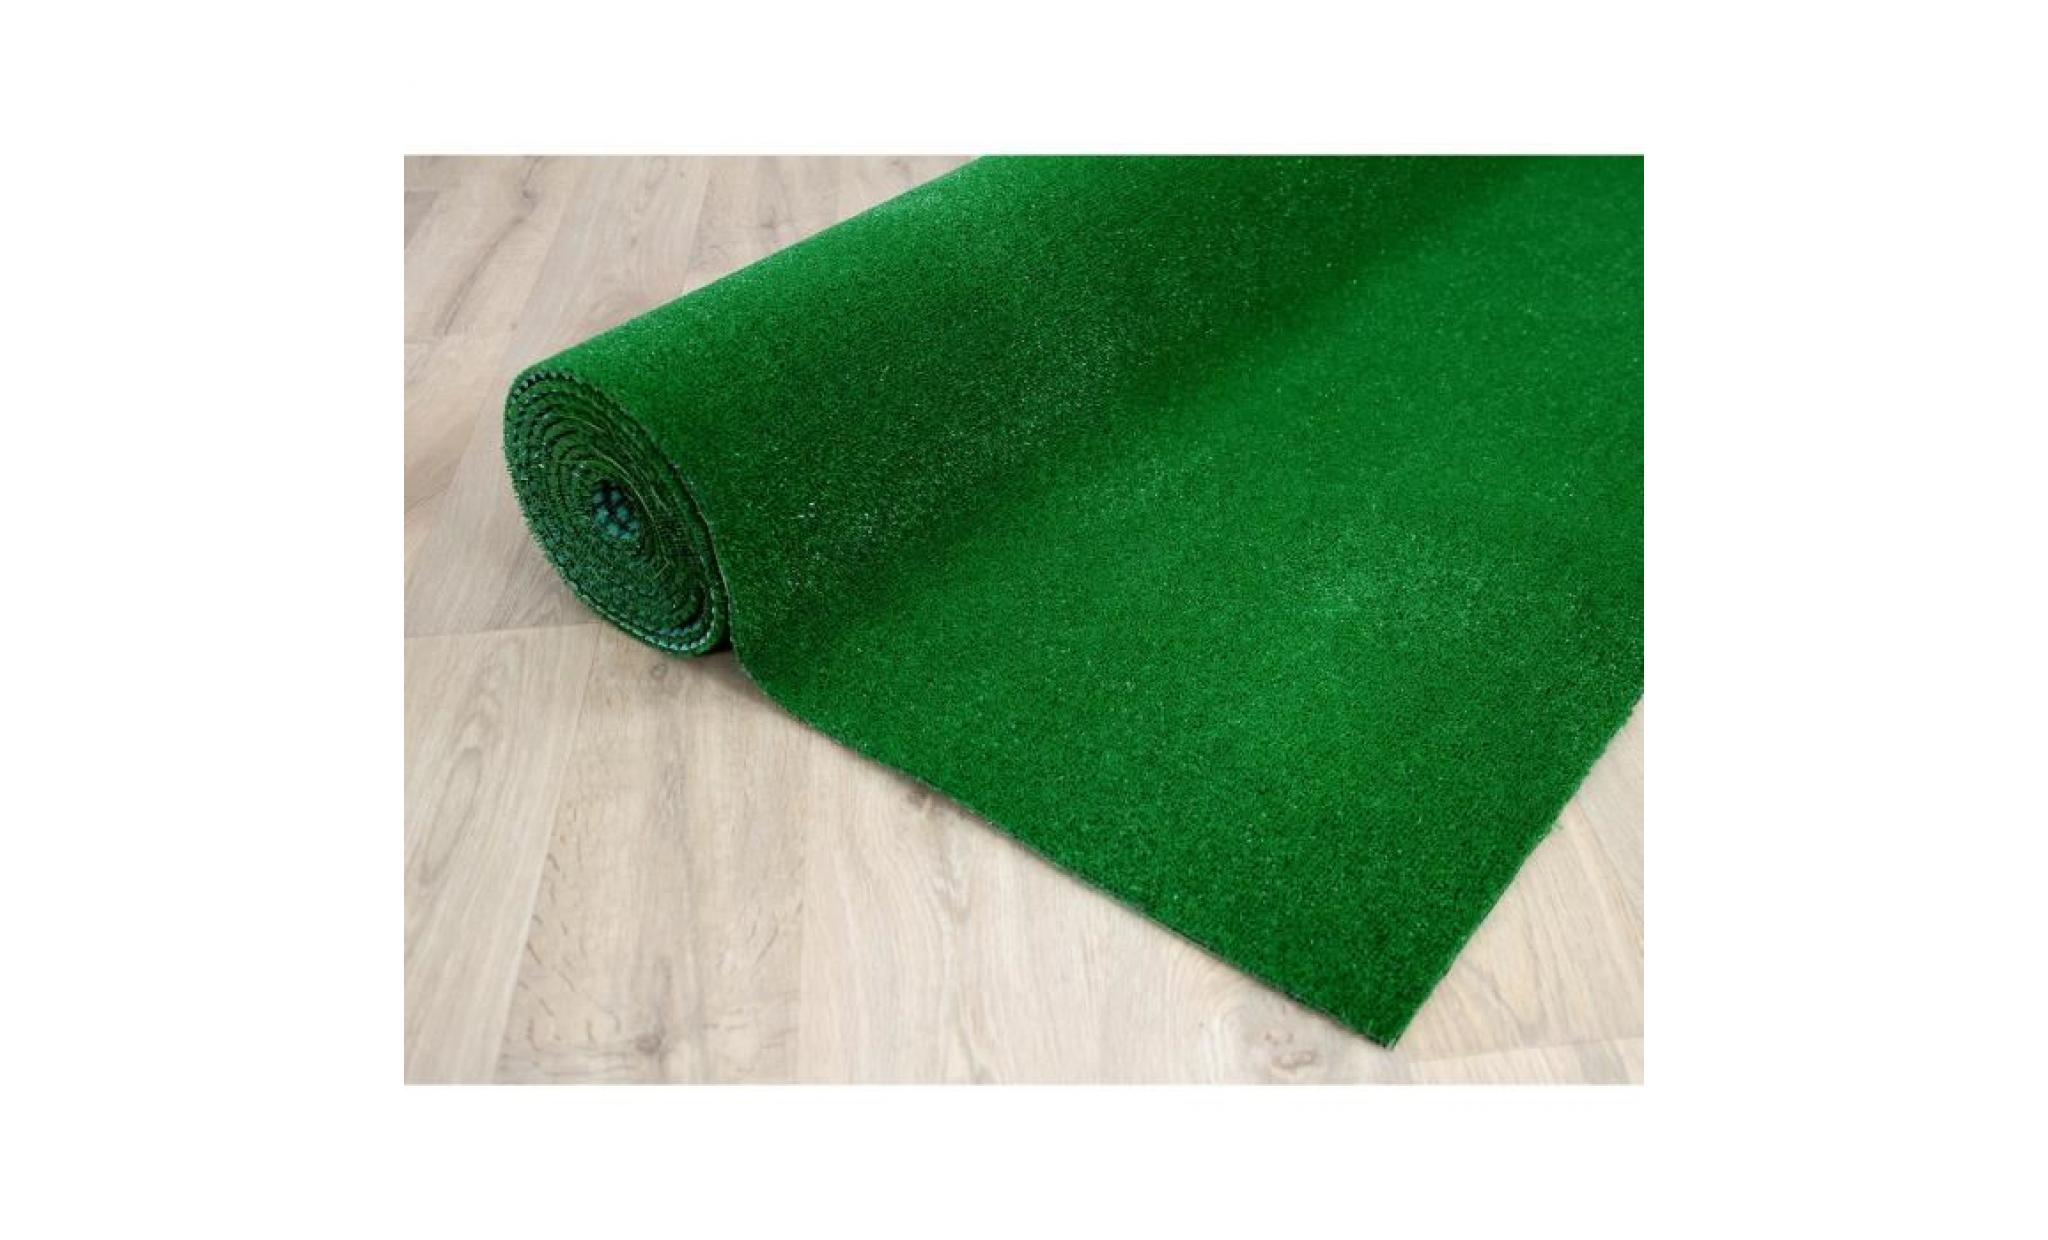 york   tapis type gazon artificiel avec nubs – pour jardin, terrasse, balcon   vert   [200x300 cm]